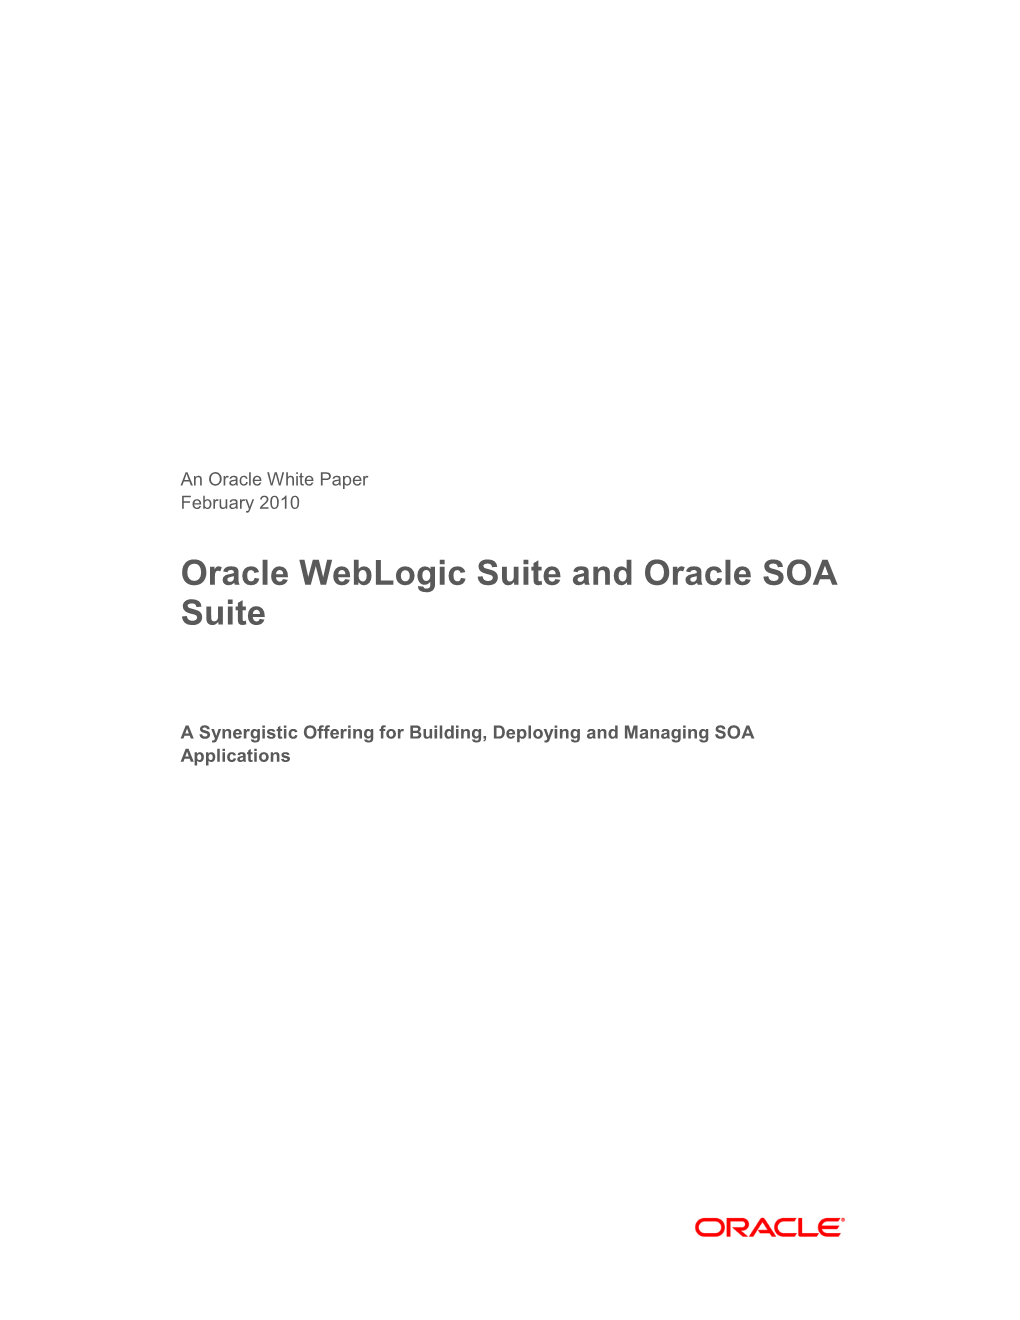 Oracle Weblogic Suite and Oracle SOA Suite